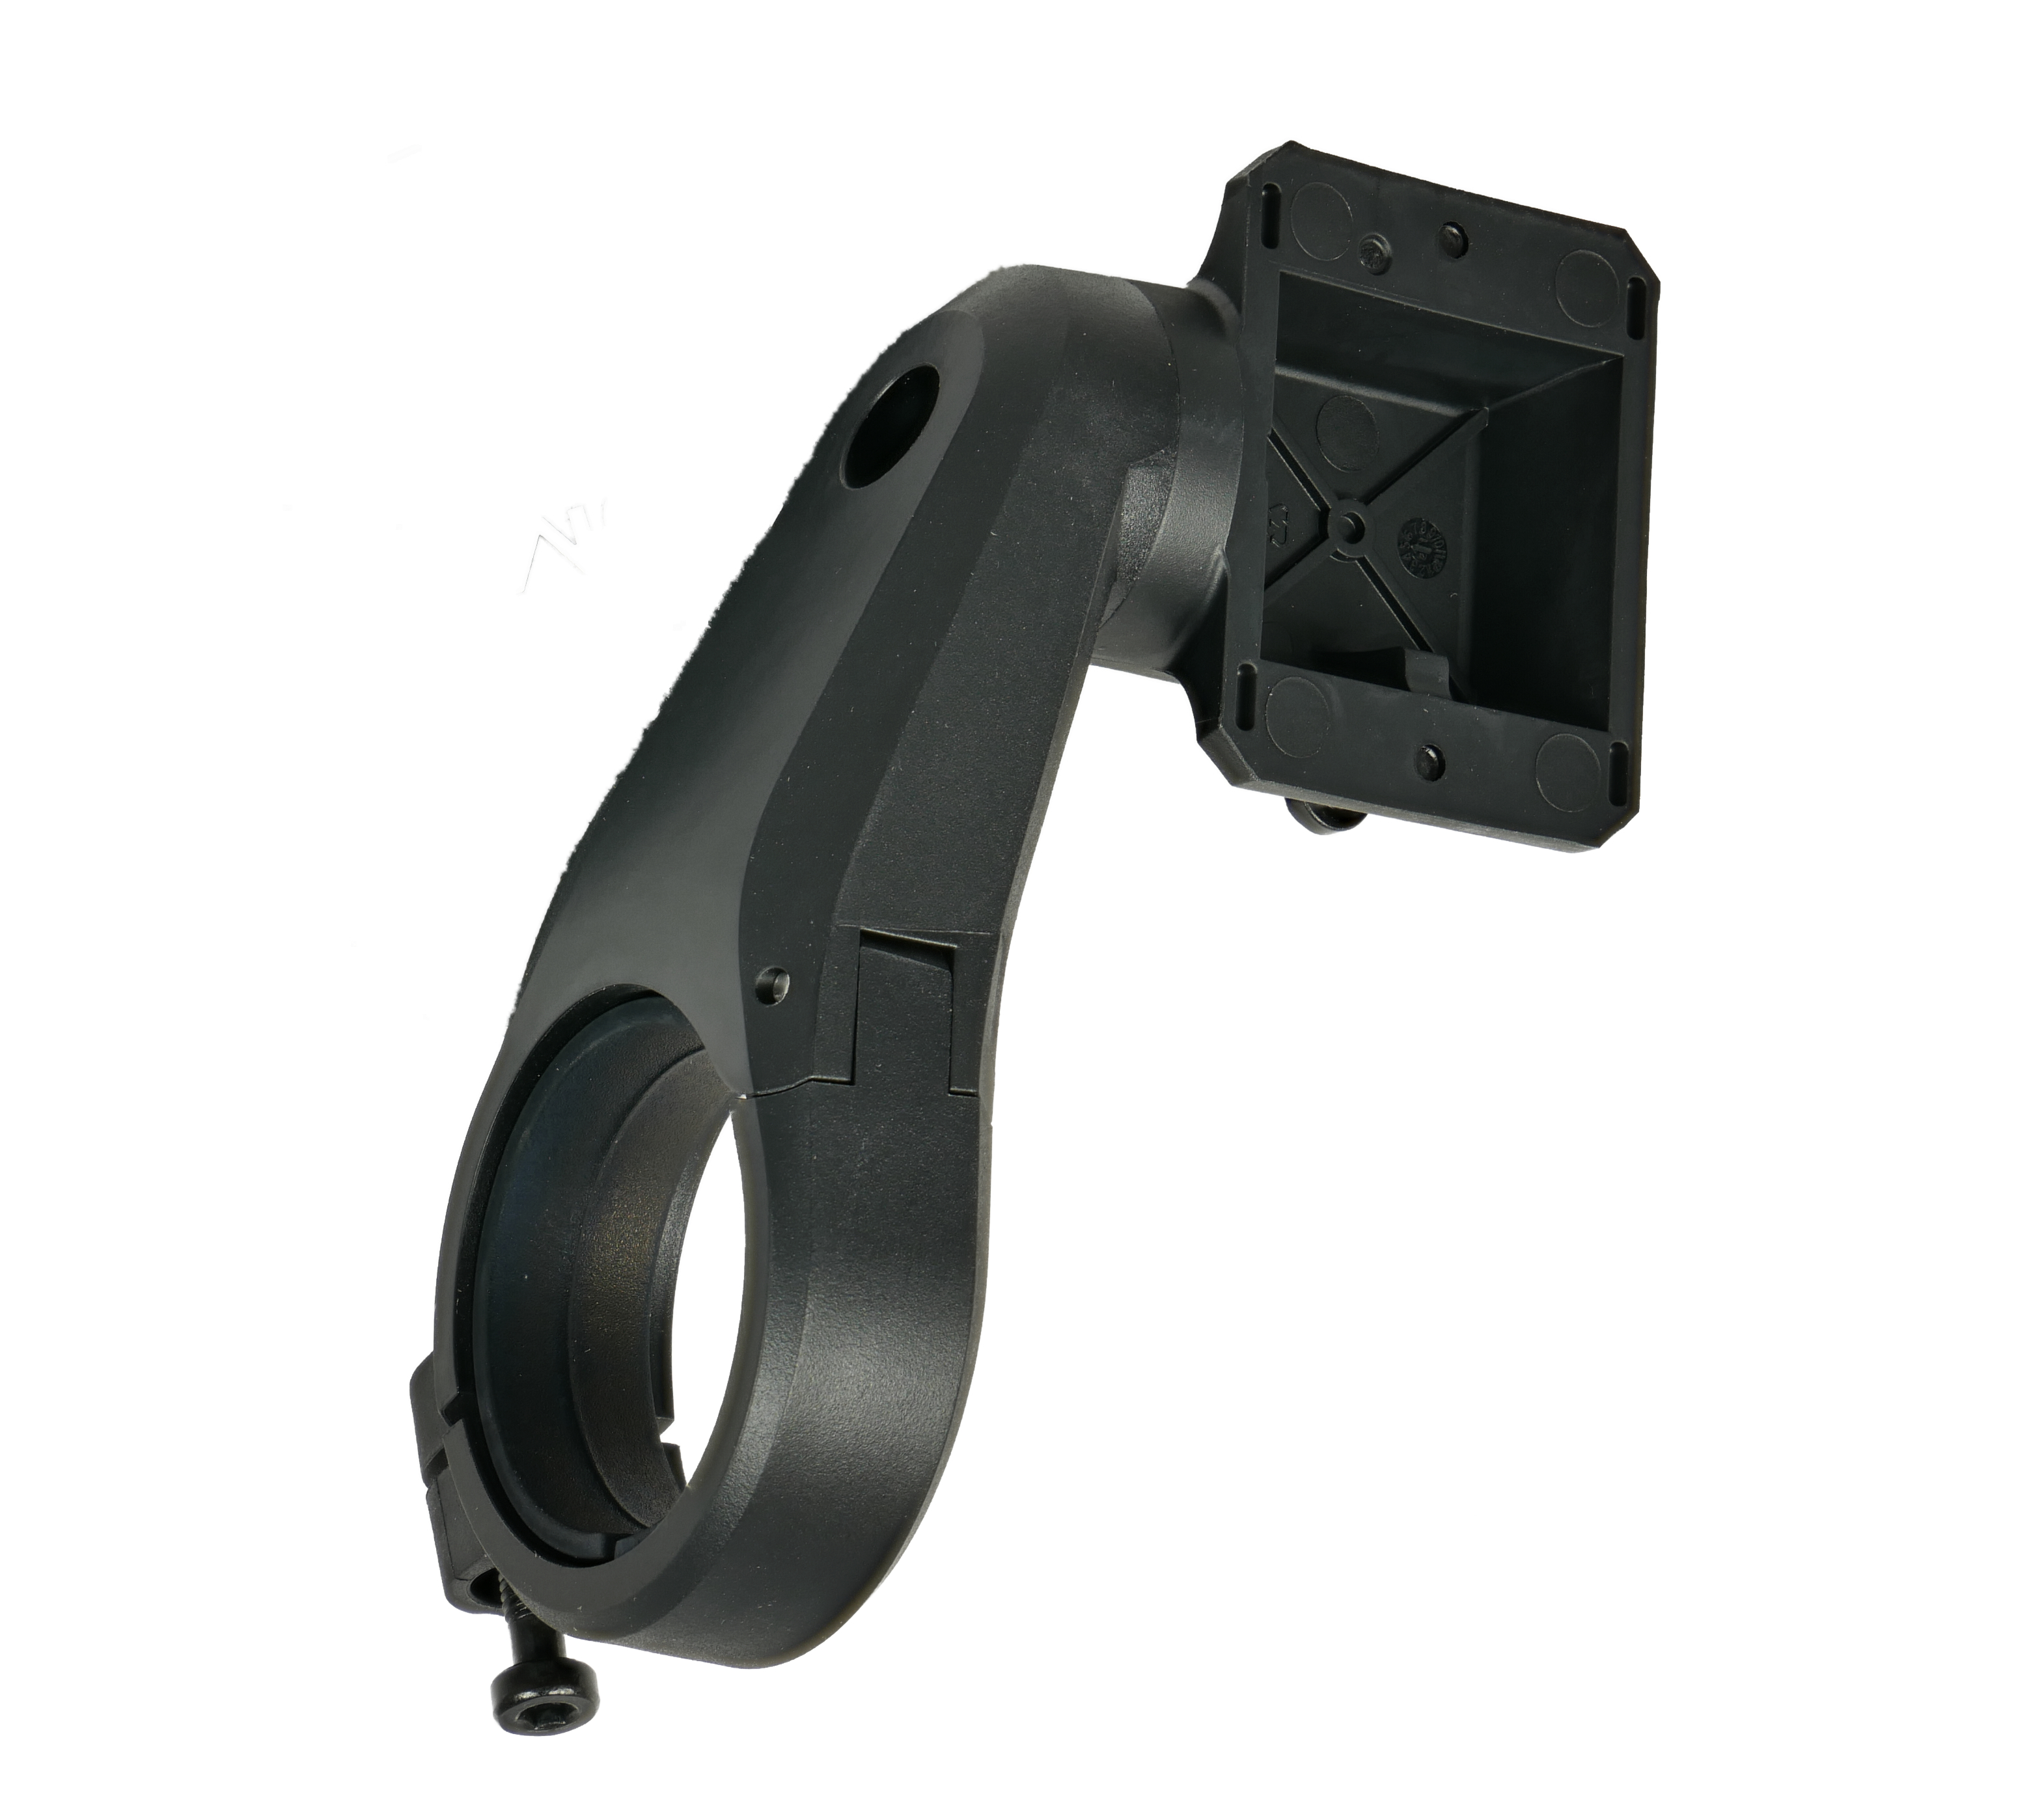 https://www.ebike24.com/media/image/47/3d/84/bosch-1-arm-holder-kiox-display.jpg